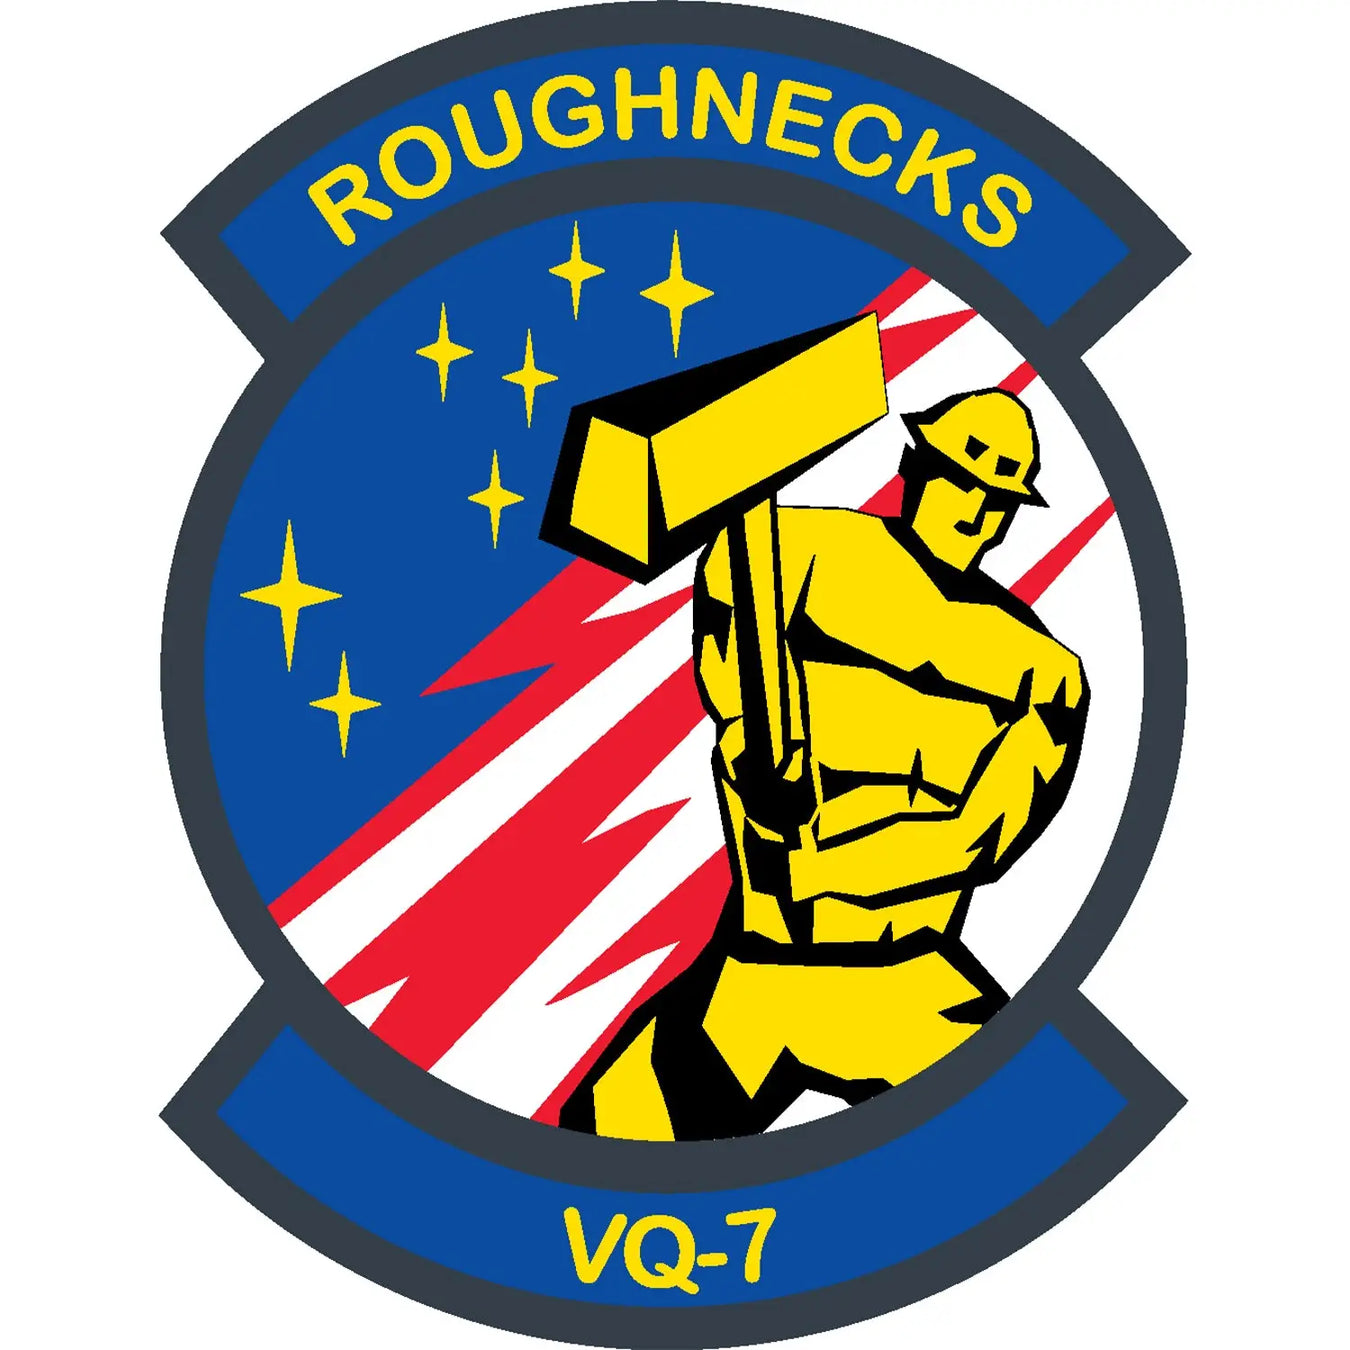 Fleet Air Reconnaissance Squadron 7 (VQ-7) logo decal emblem crest insignia